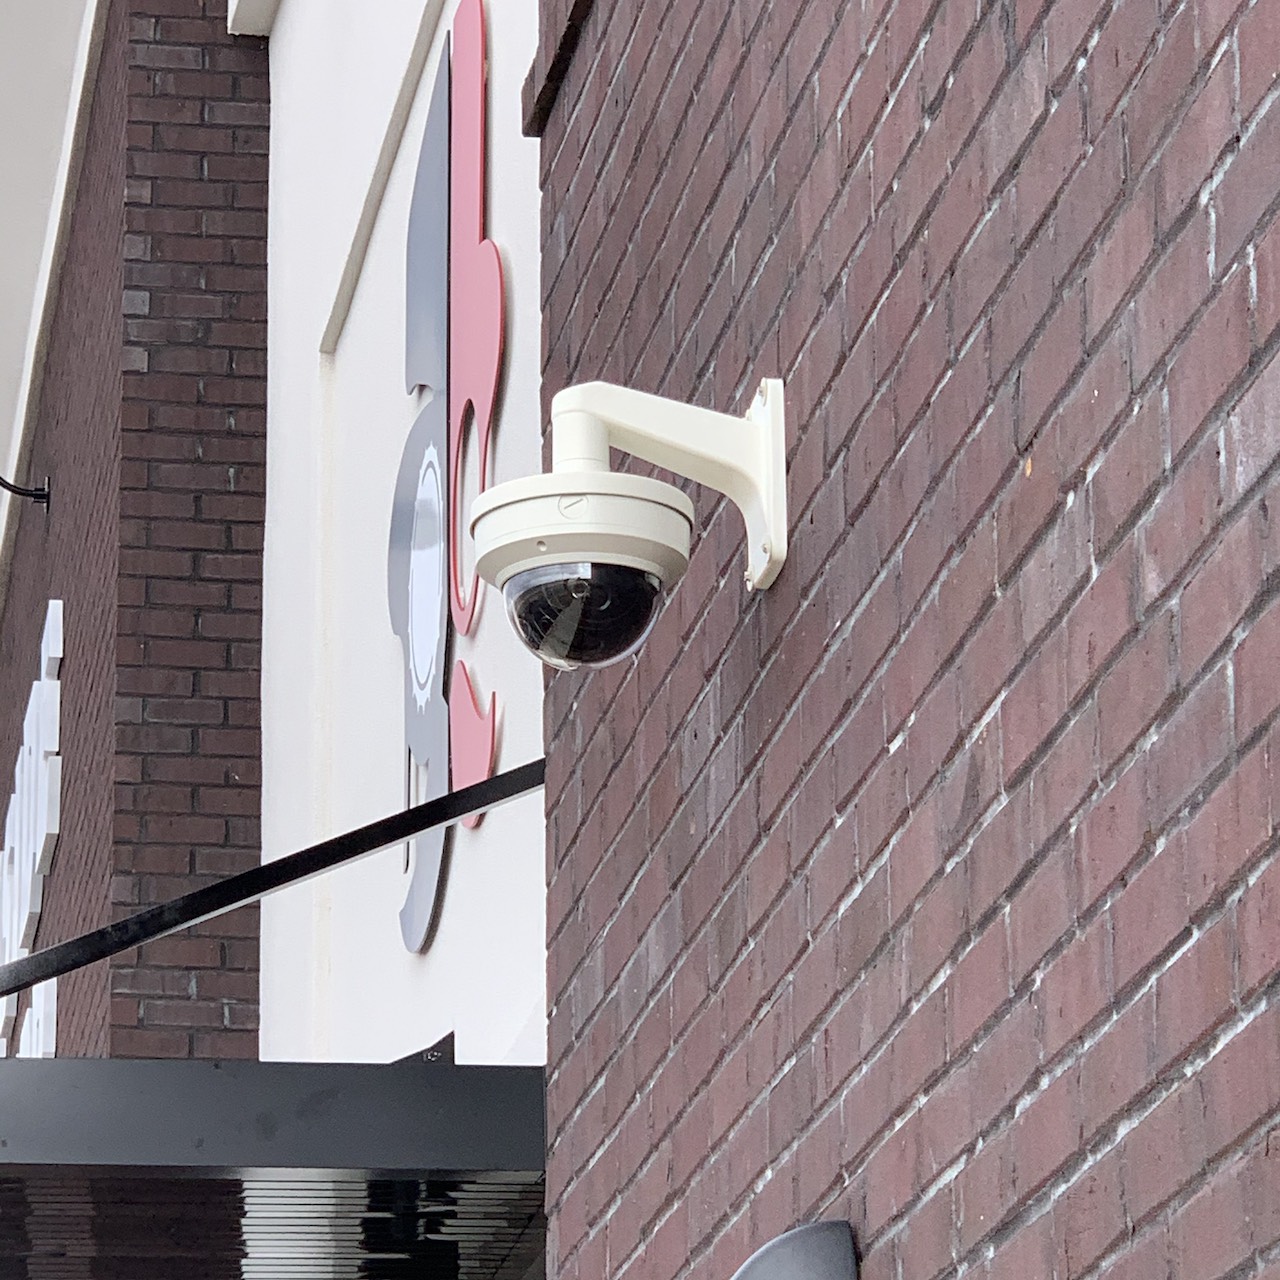 IP CCTV cameras installed on exterior of building